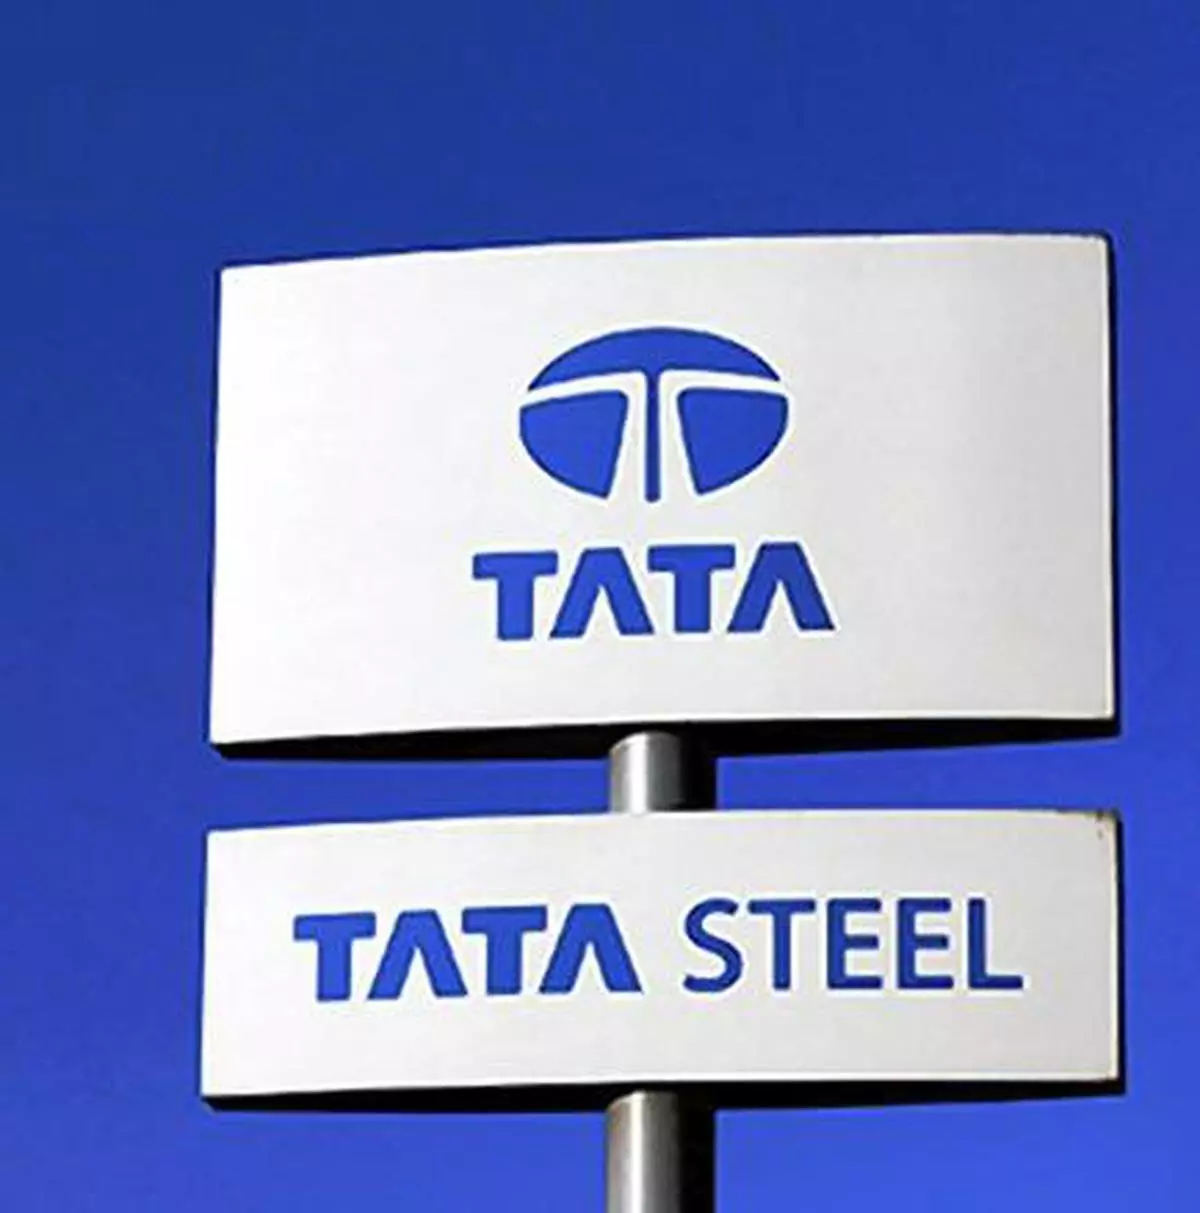 Tata Steel (Thailand)